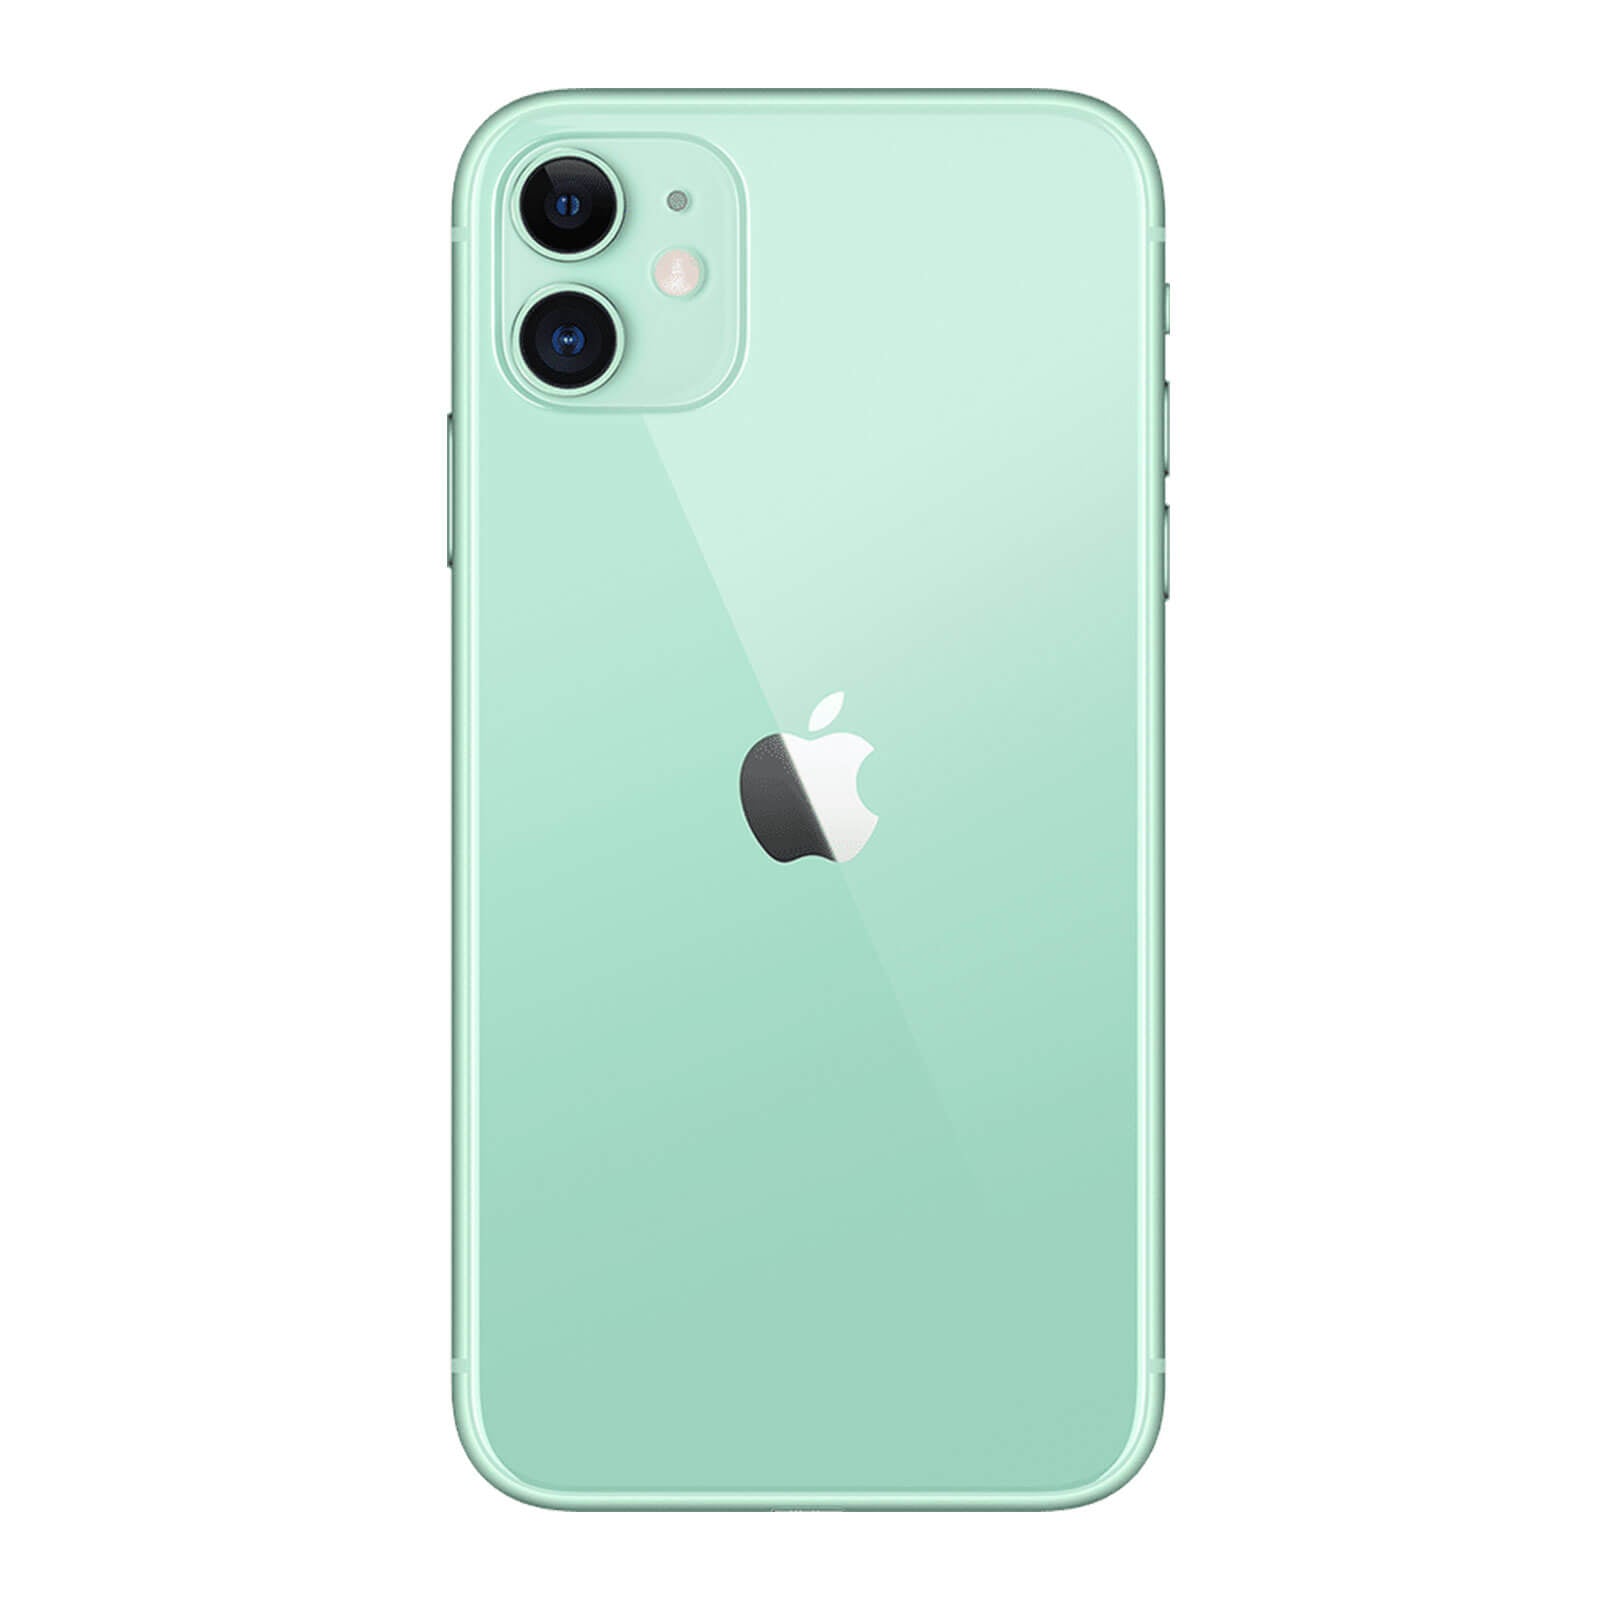 Apple iPhone 11 256GB Green Pristine - AT&T